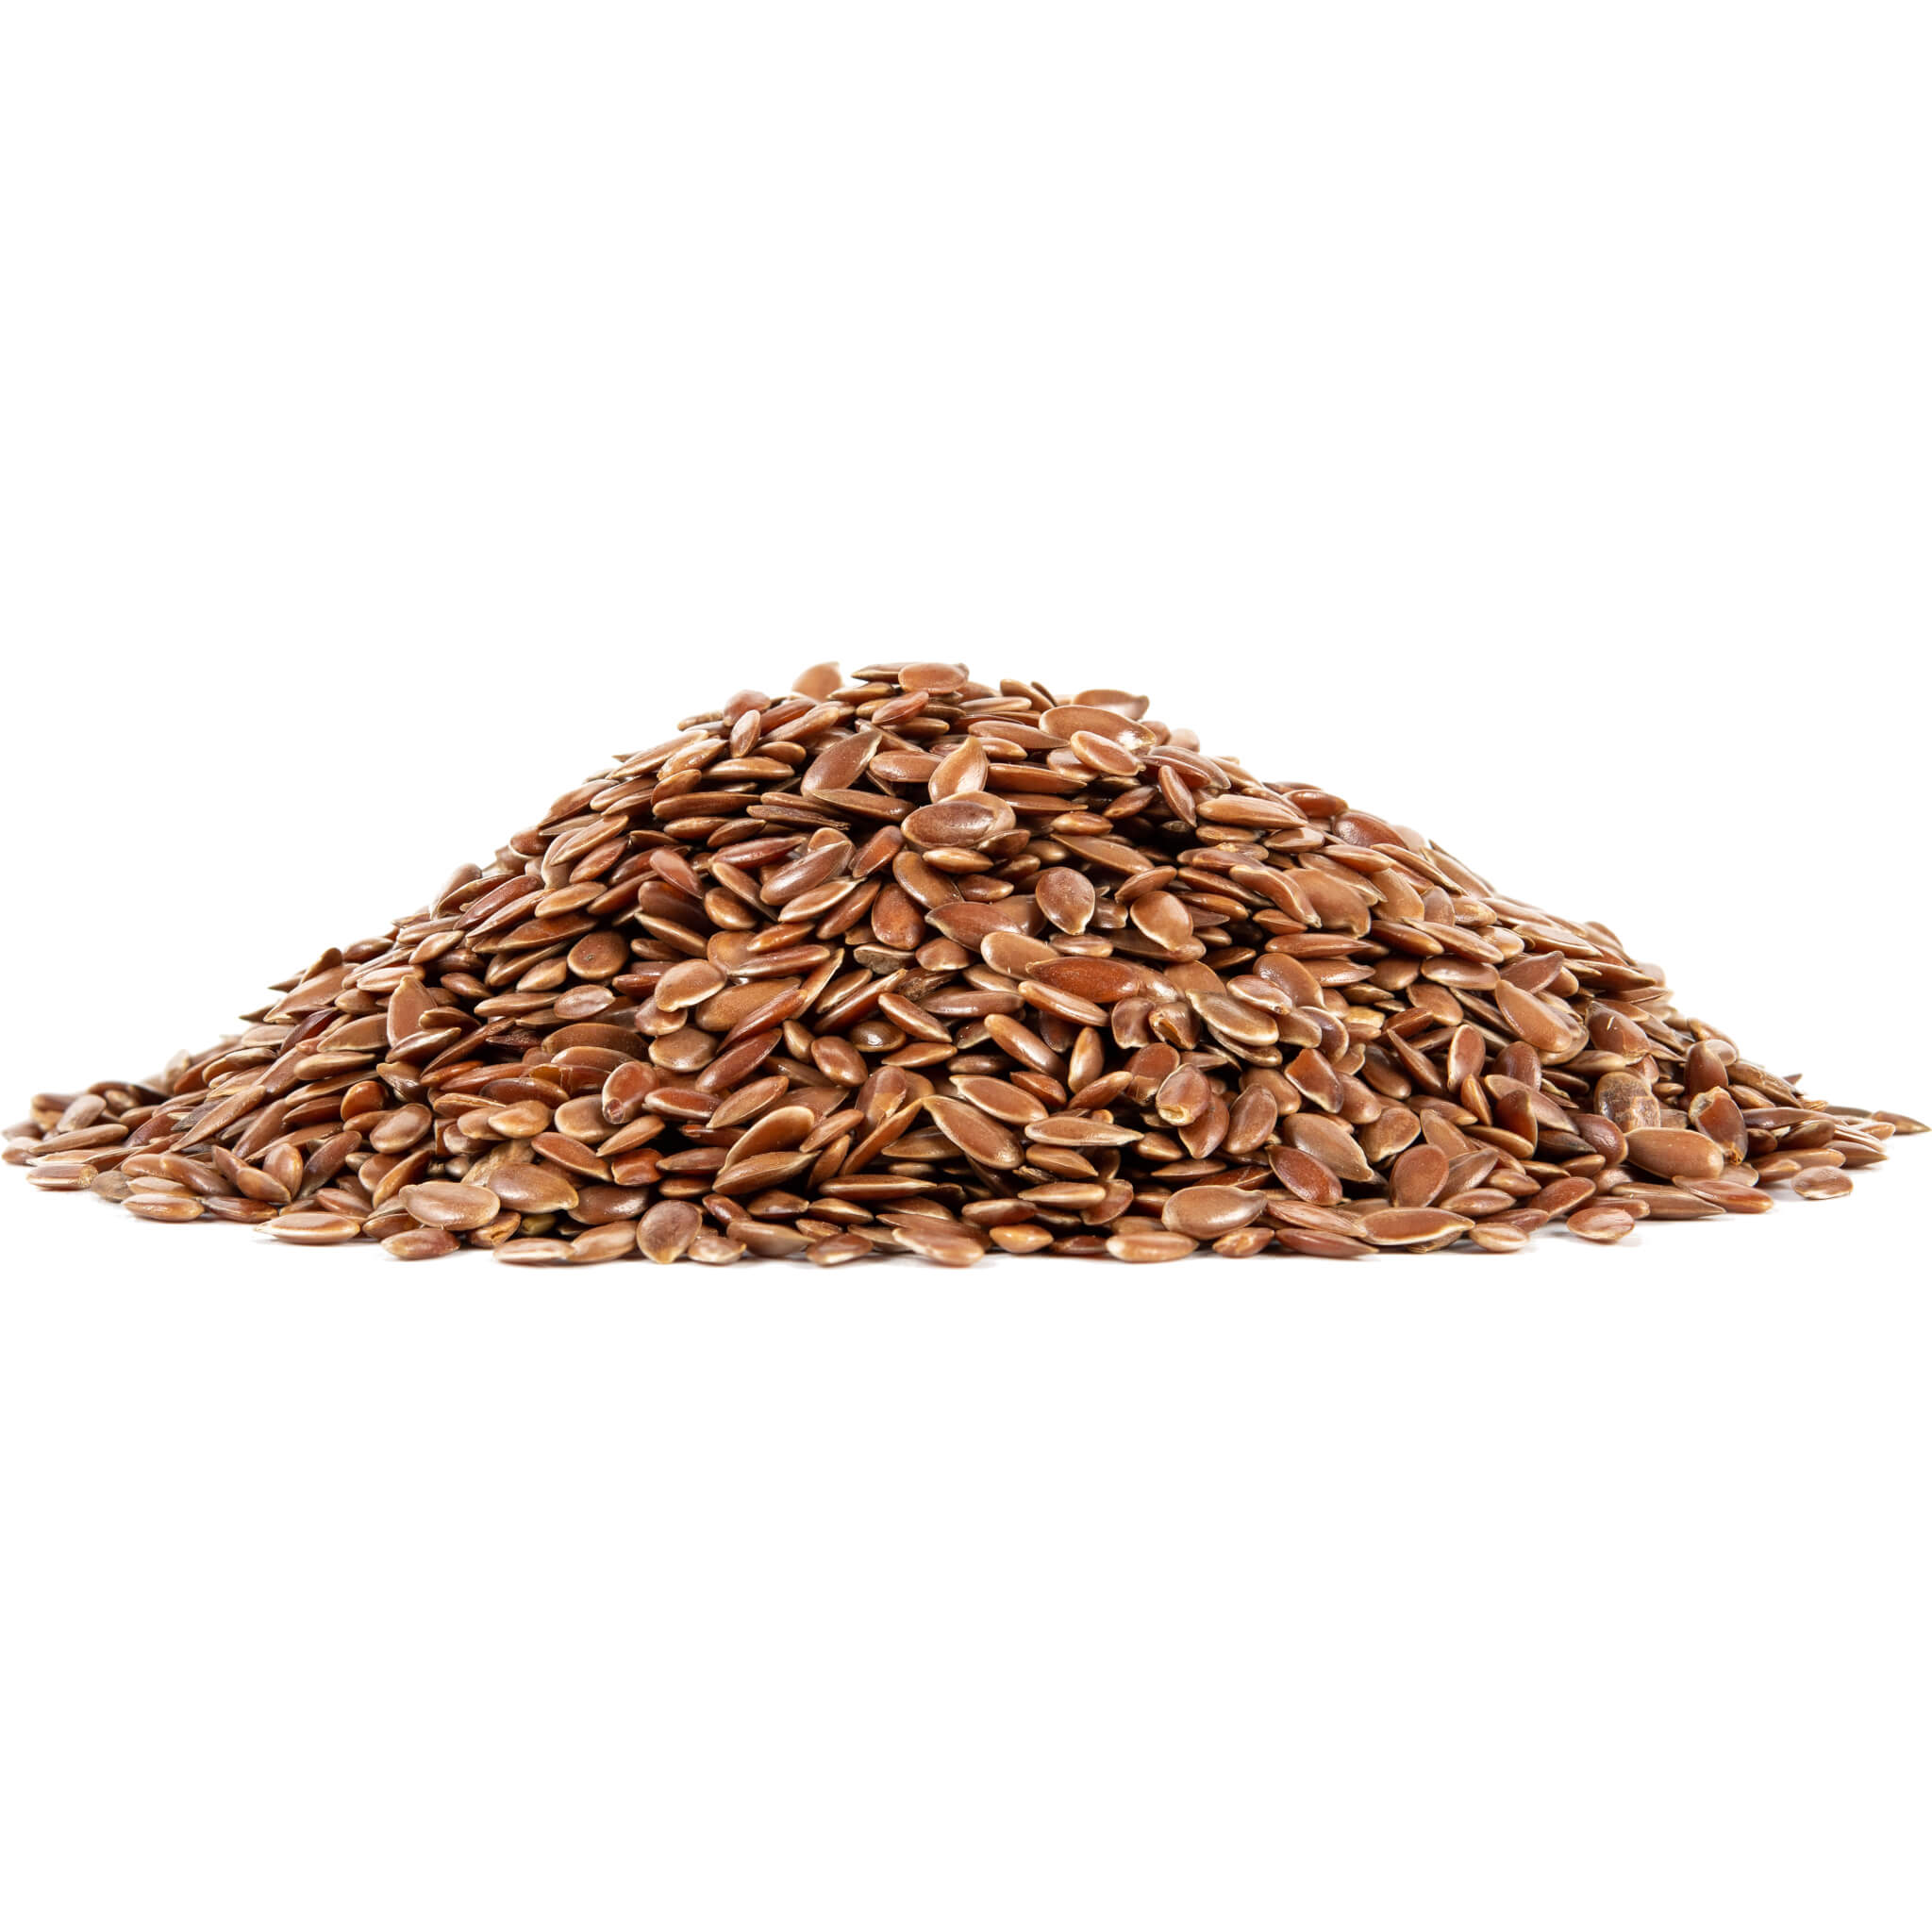 File:Brown Flax Seeds.jpg - Wikipedia